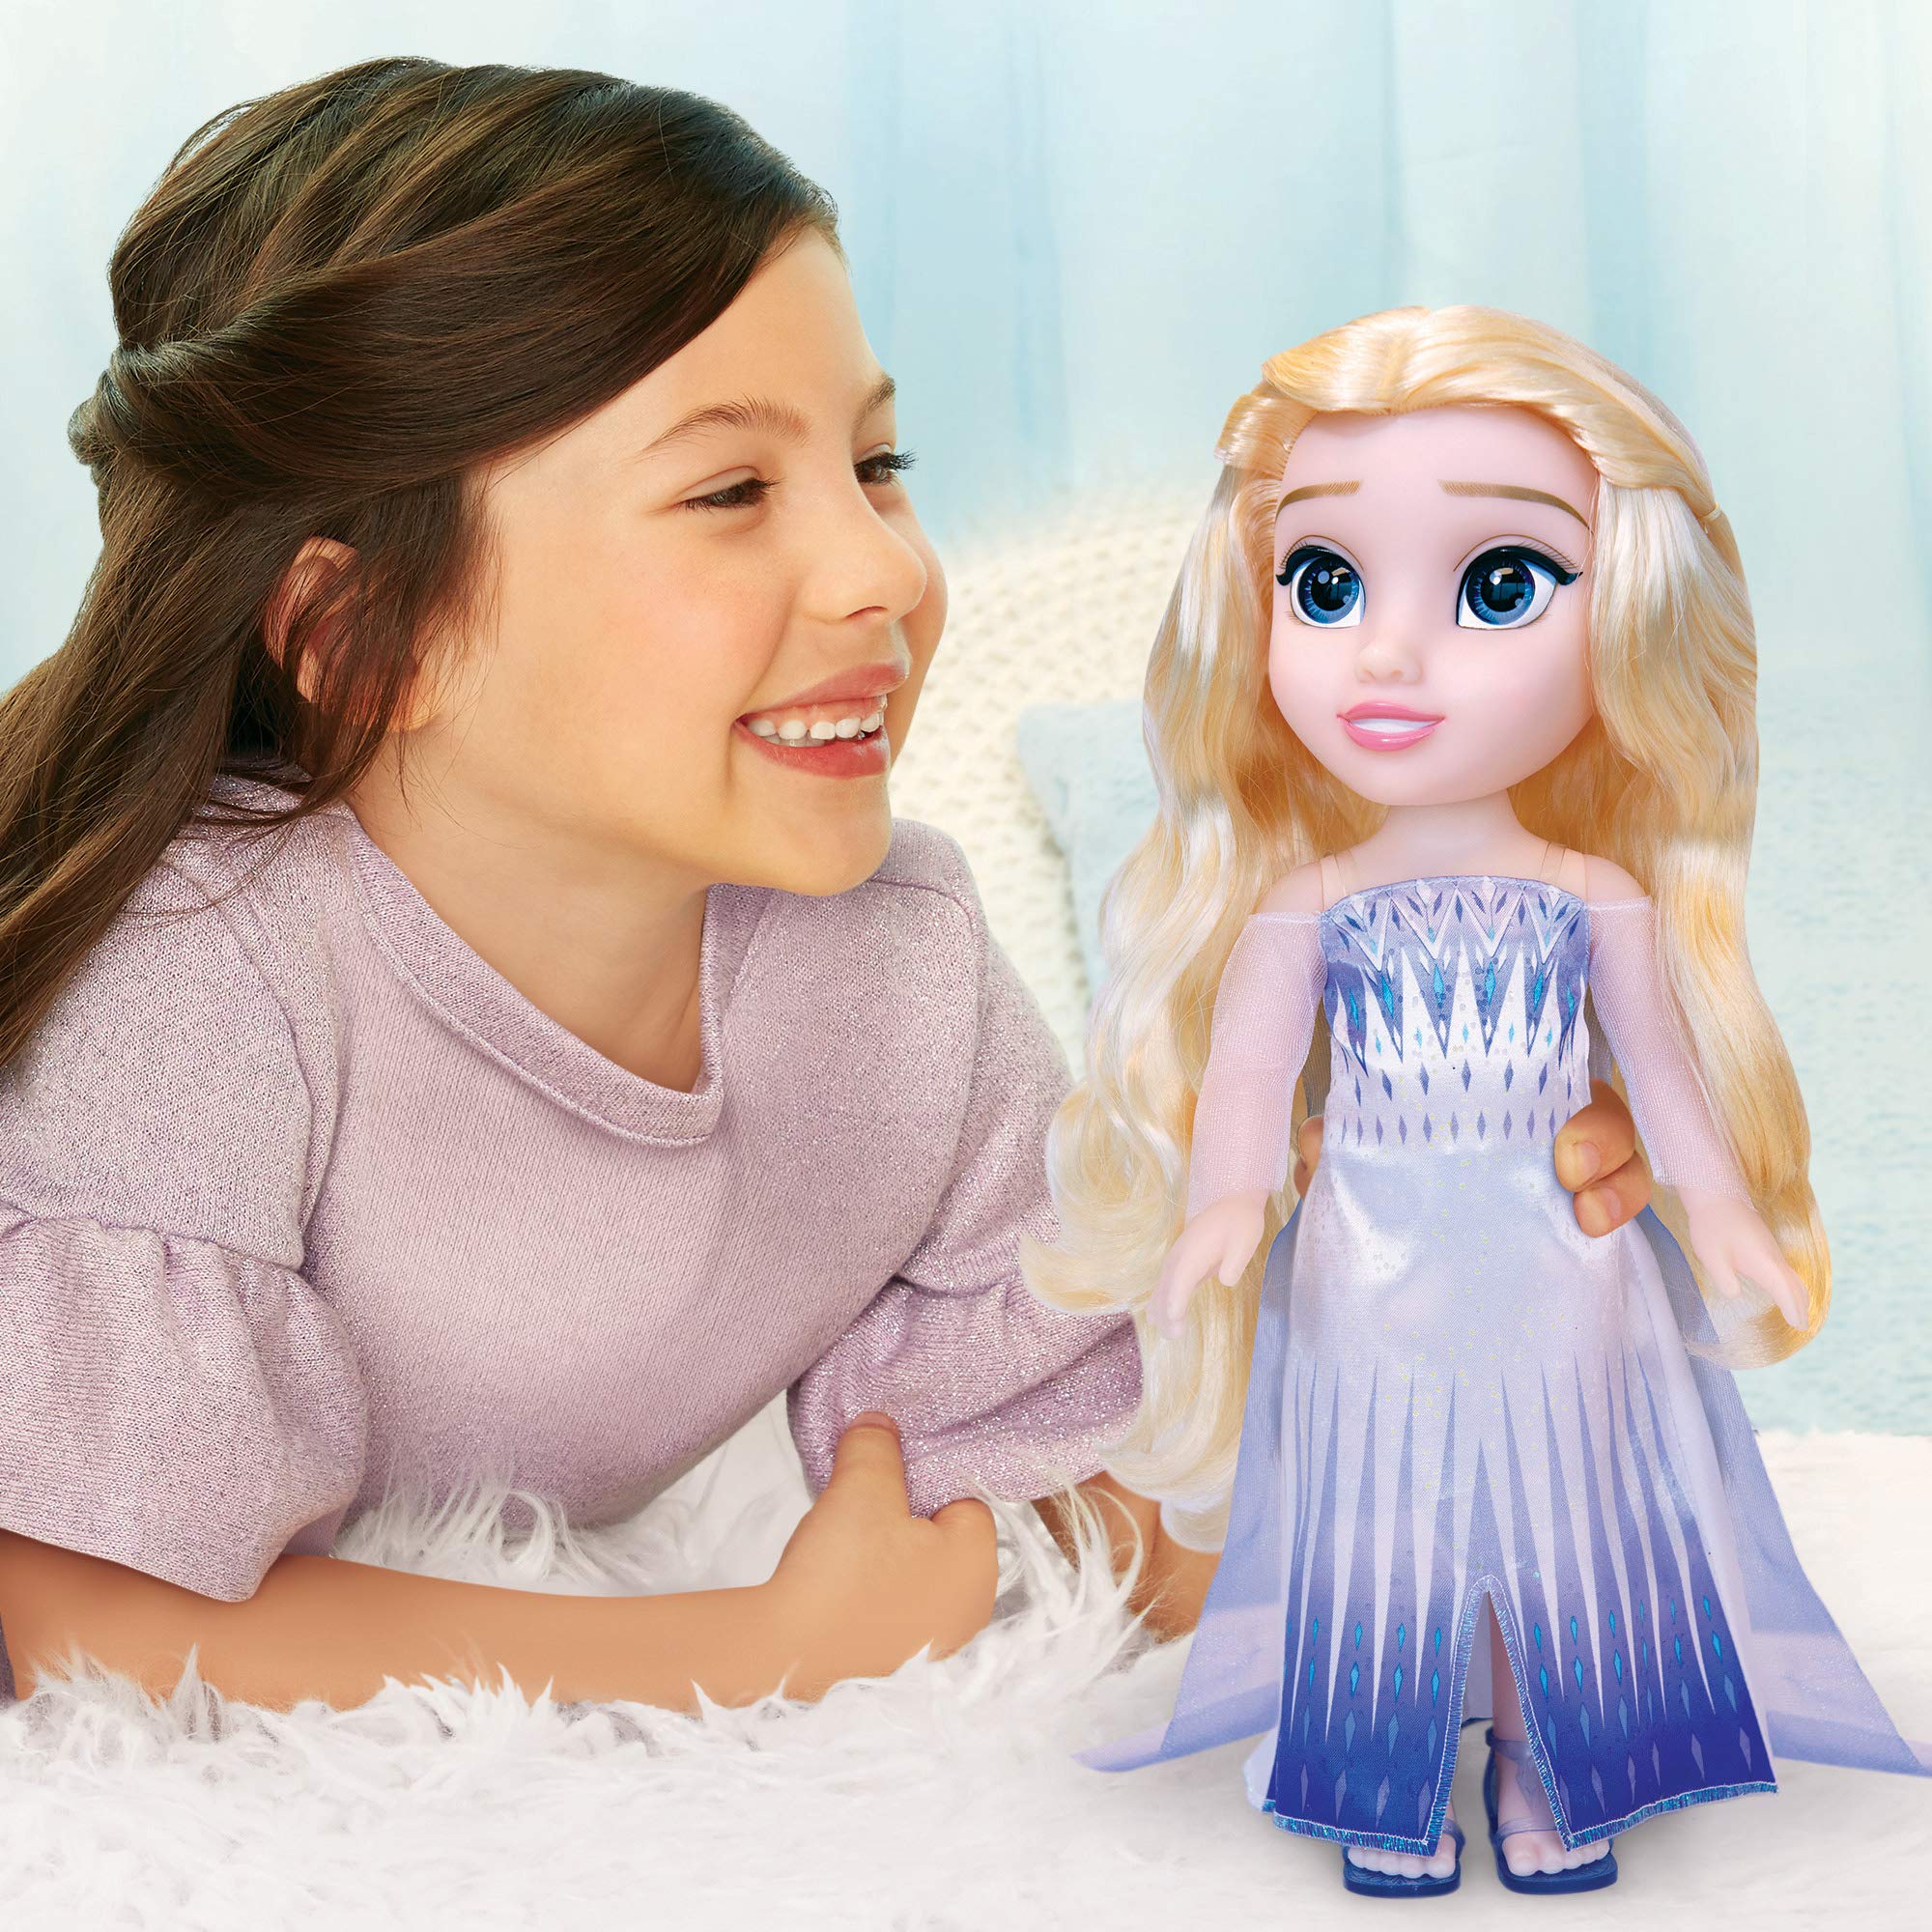 Disney Frozen 2 Elsa Doll 14 Inches Tall